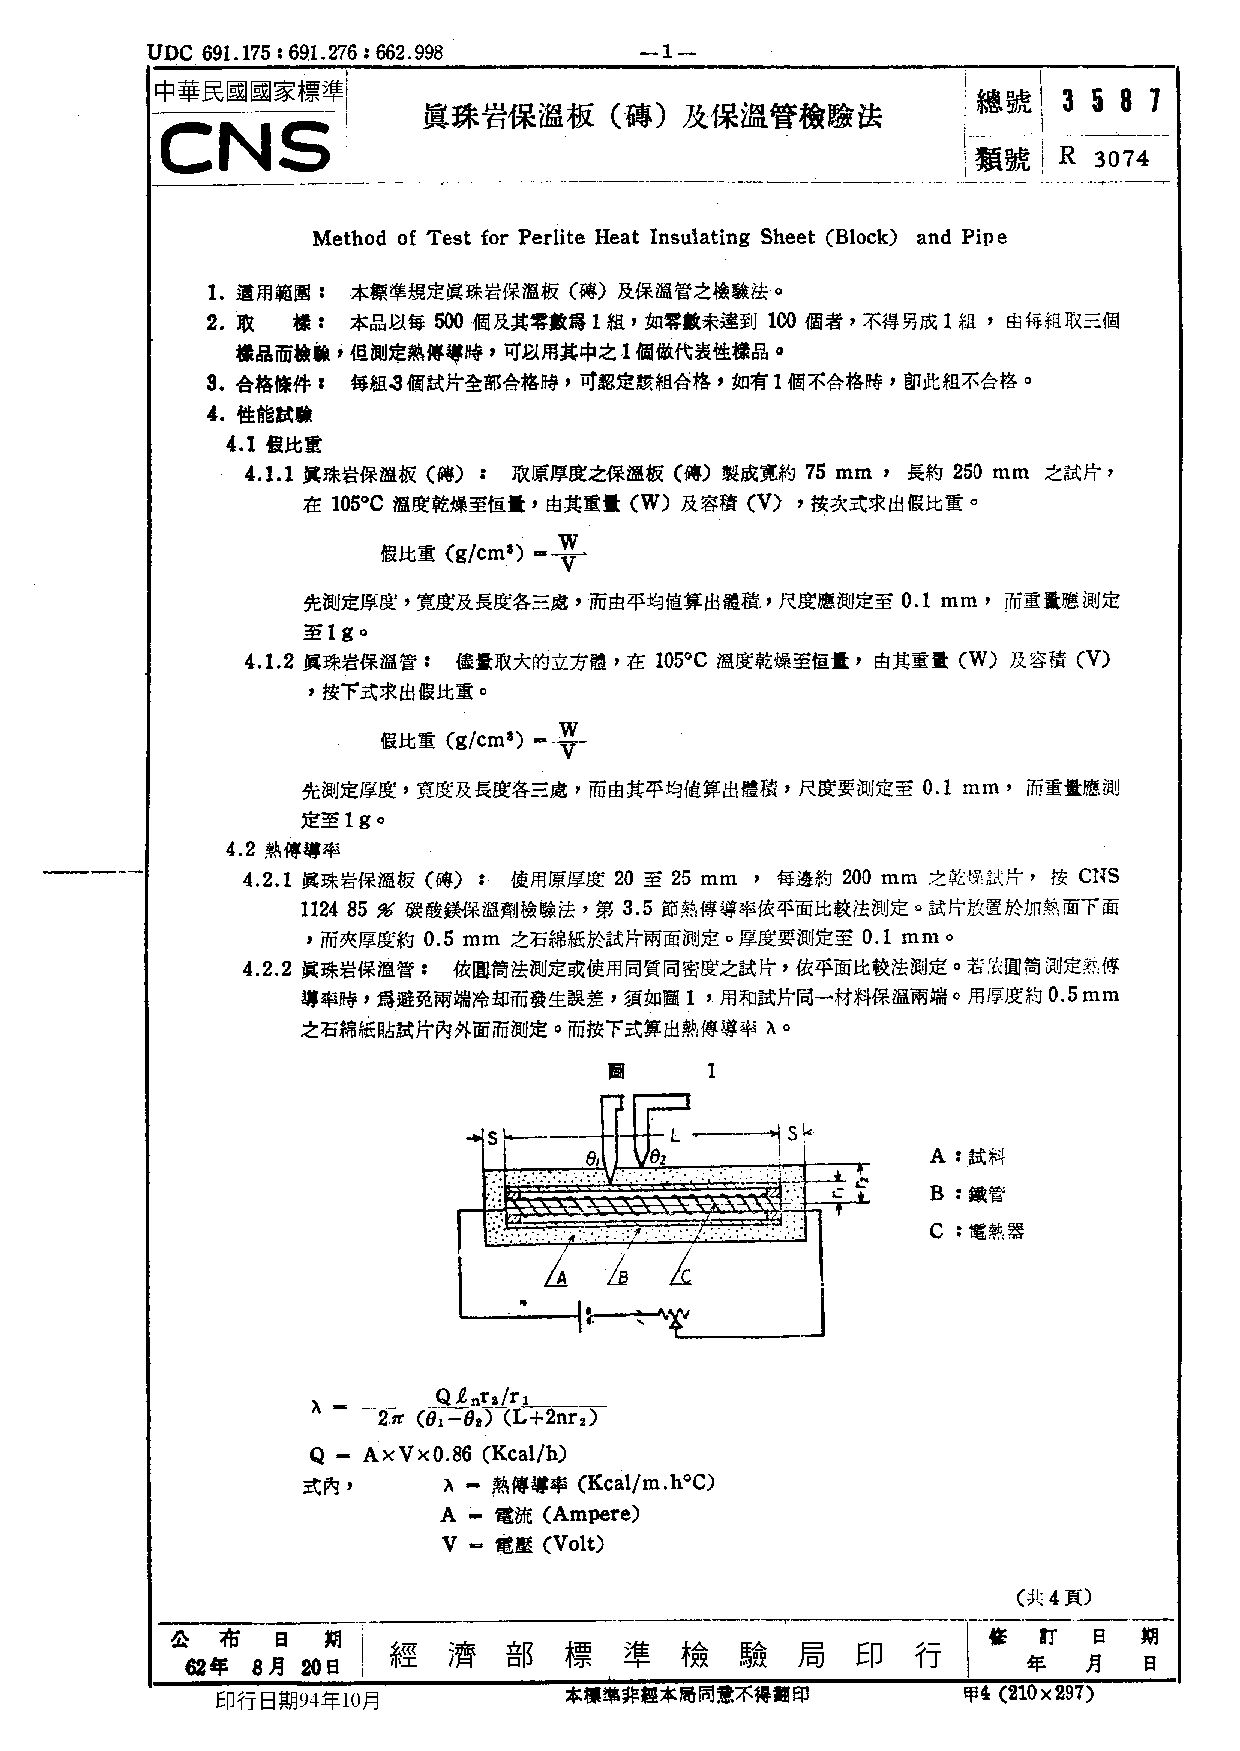 CNS 3587-1973 真珠岩保温板（砖）及保温管检验法标准